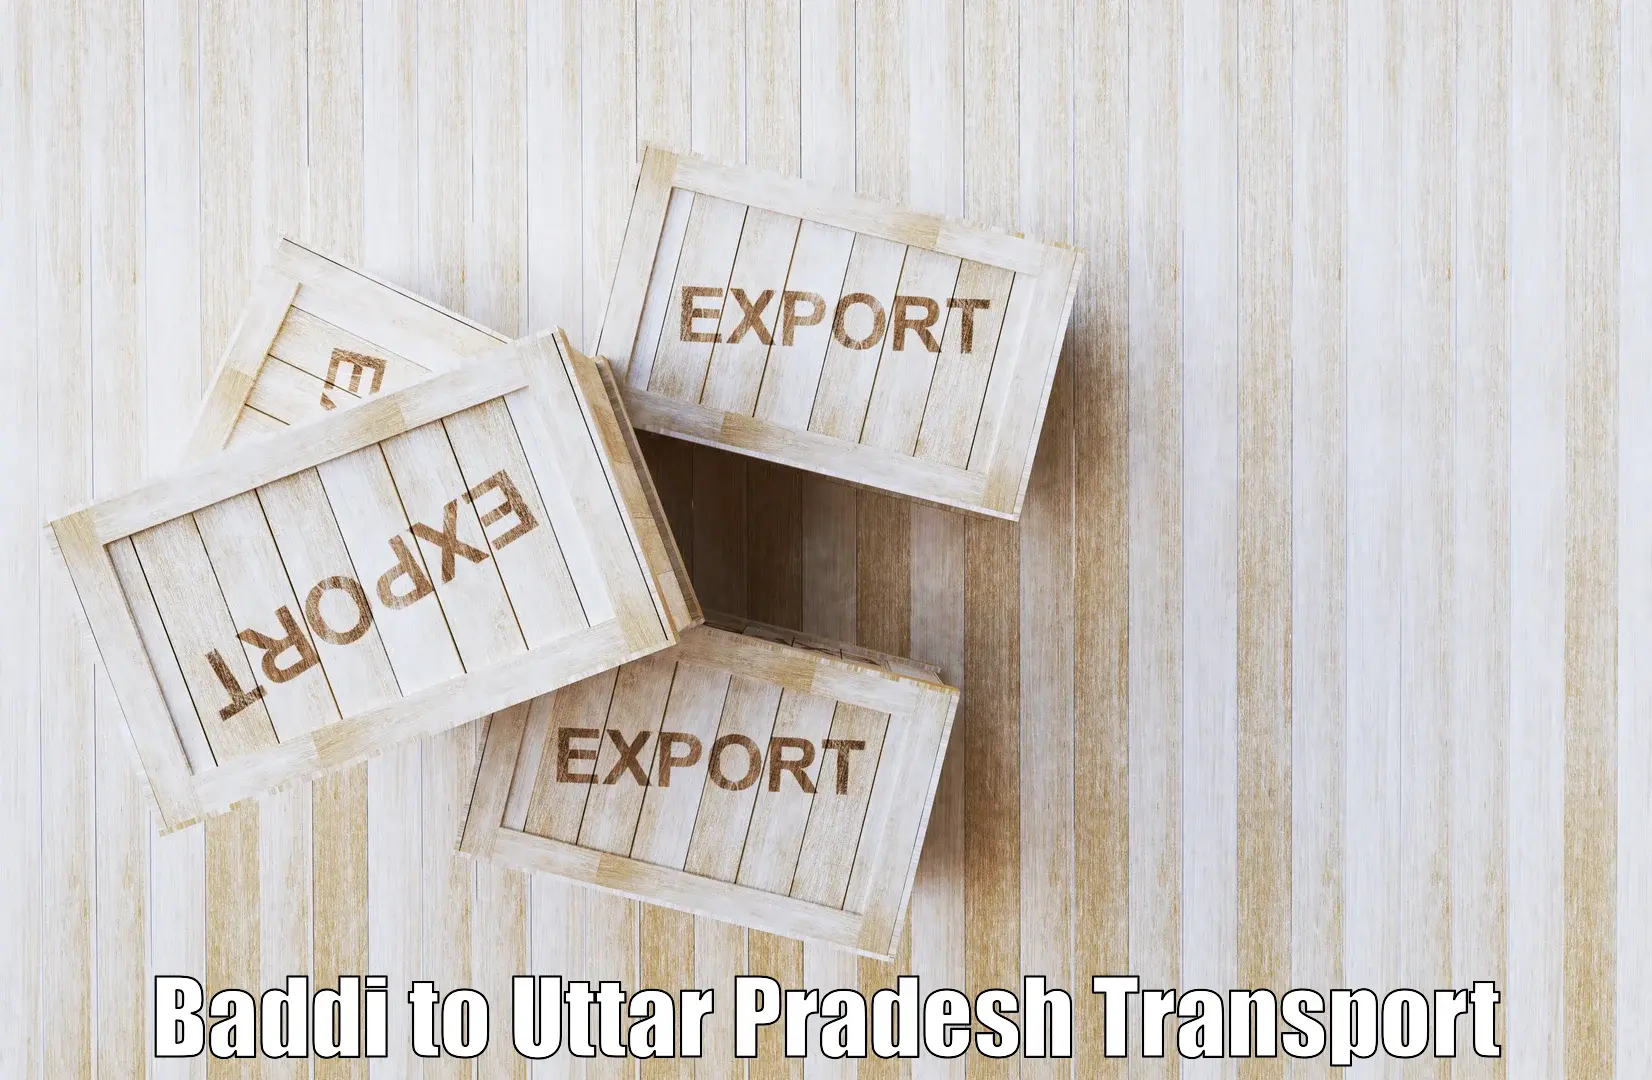 Transport shared services Baddi to Dibai